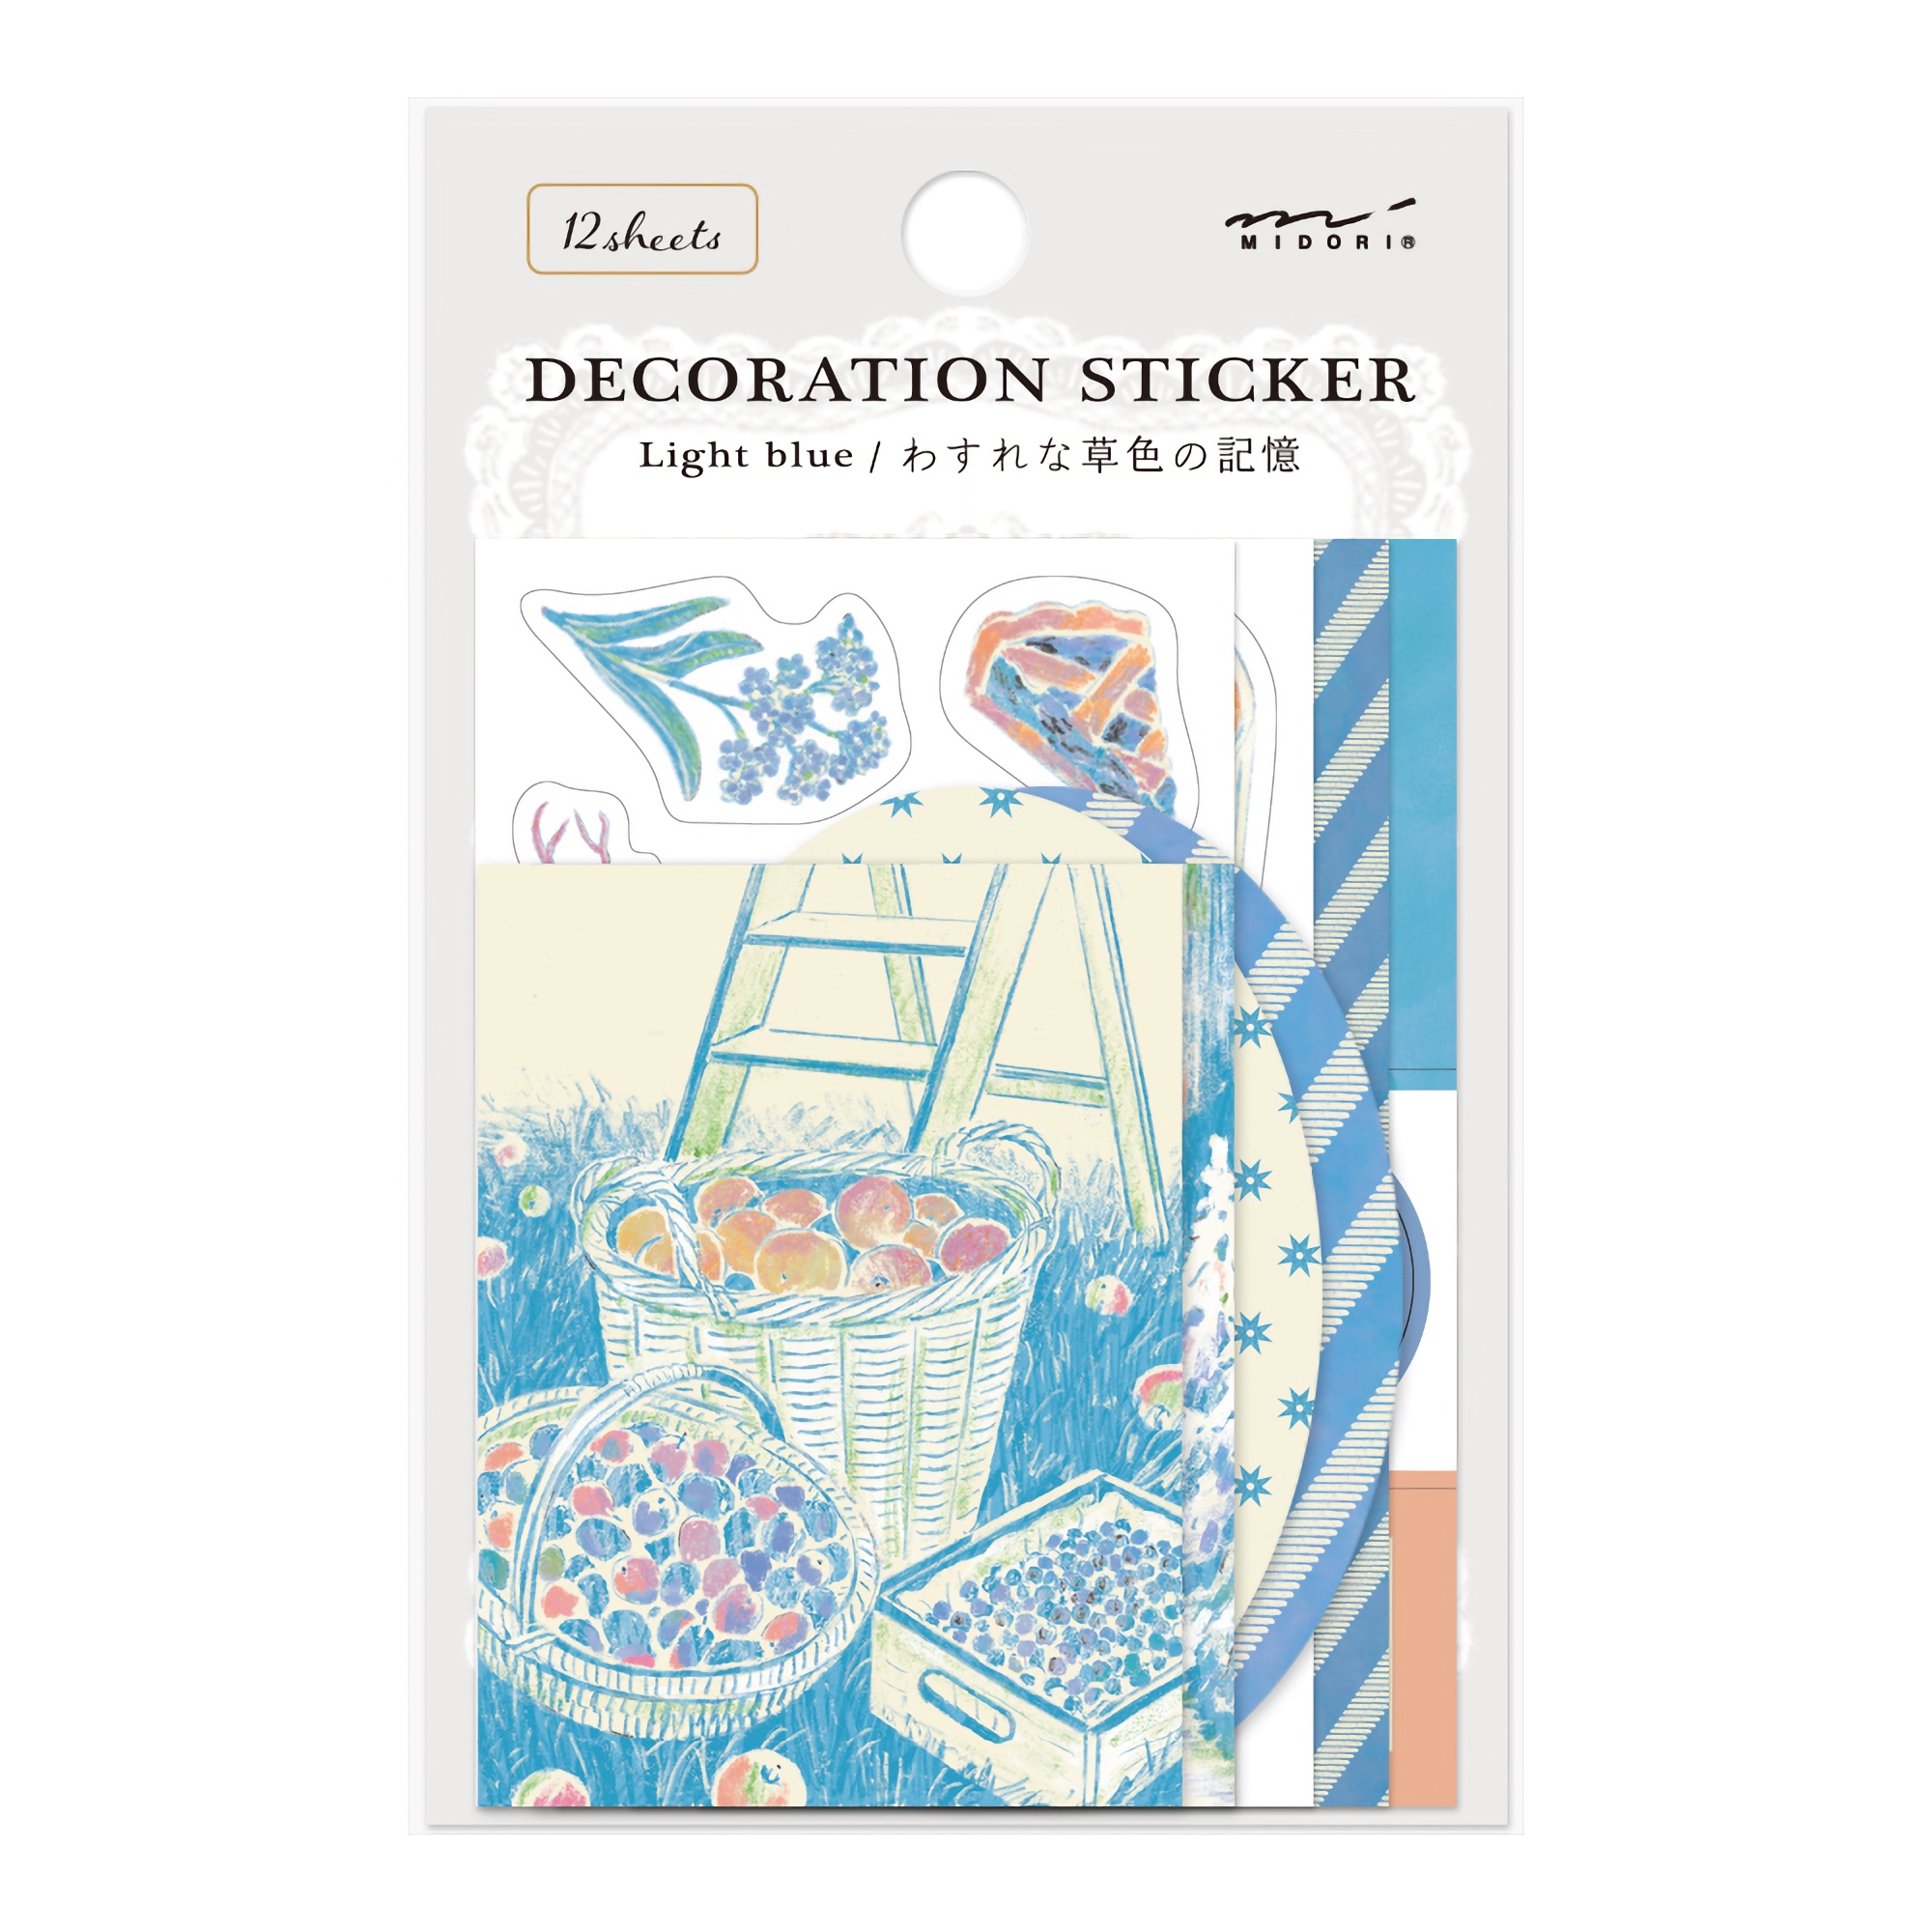 Midori Decoration Sticker Light Blue